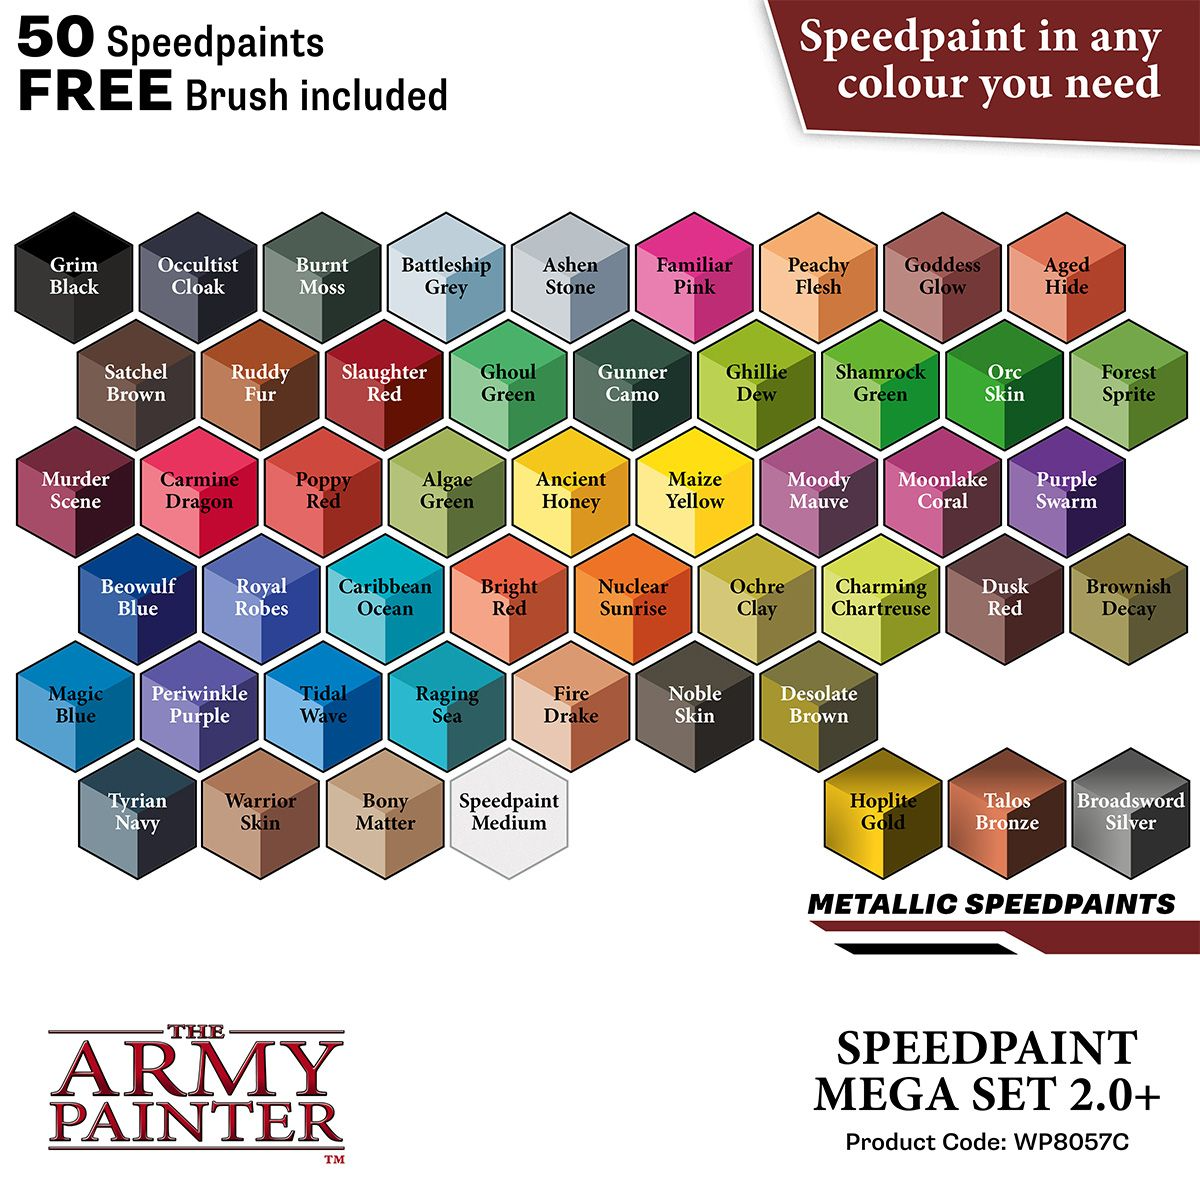 The Army Painter - Speedpaint 2.0 - Mega Set at Mepel